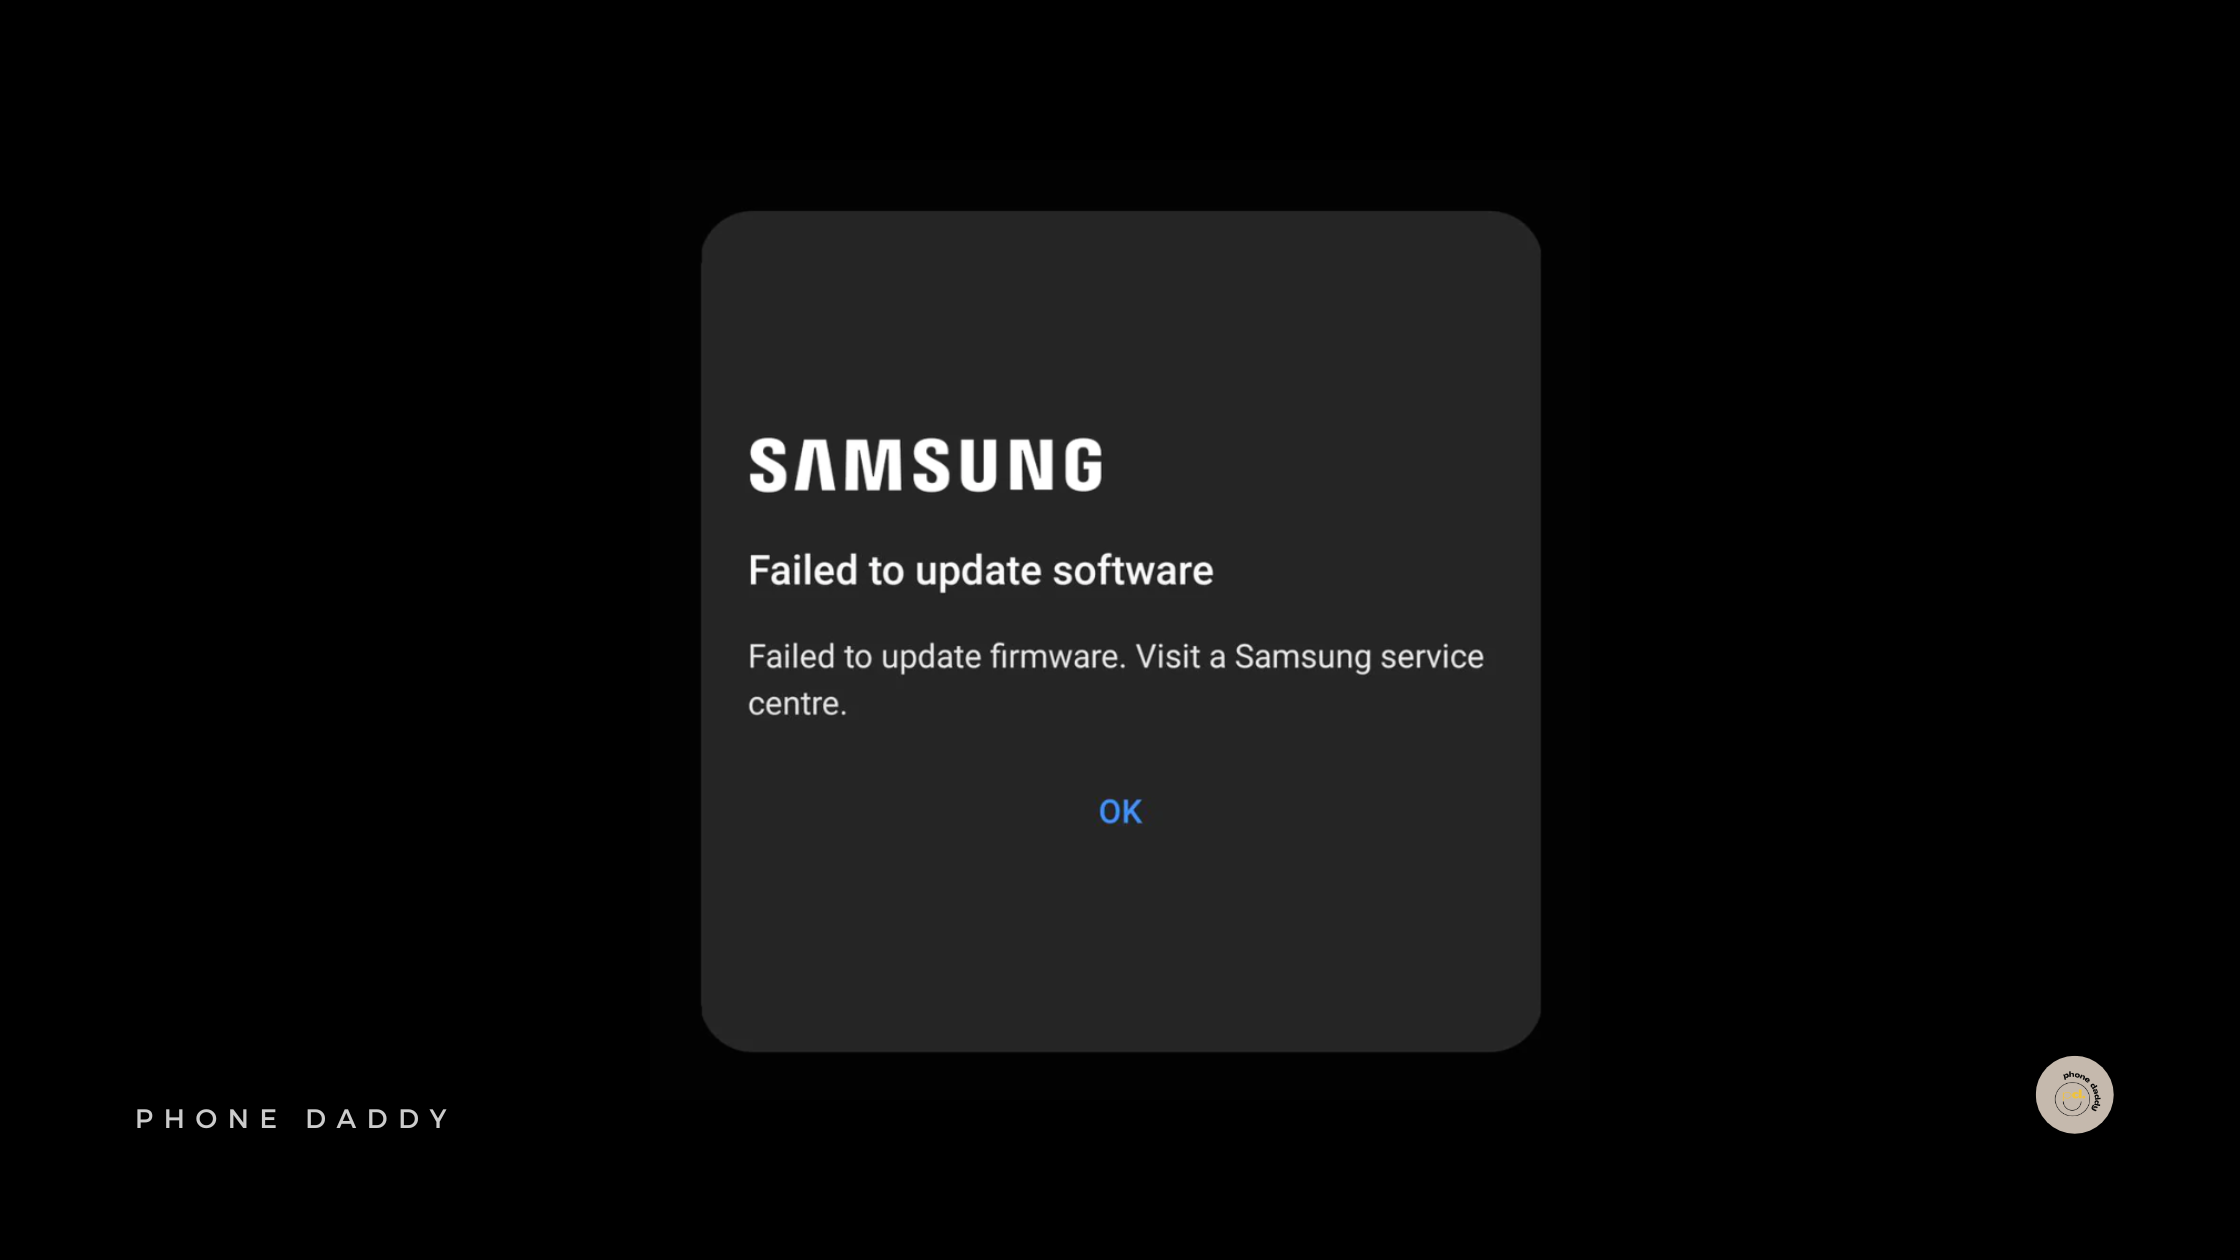 Samsung Ends Security Updates for Older Galaxy Models